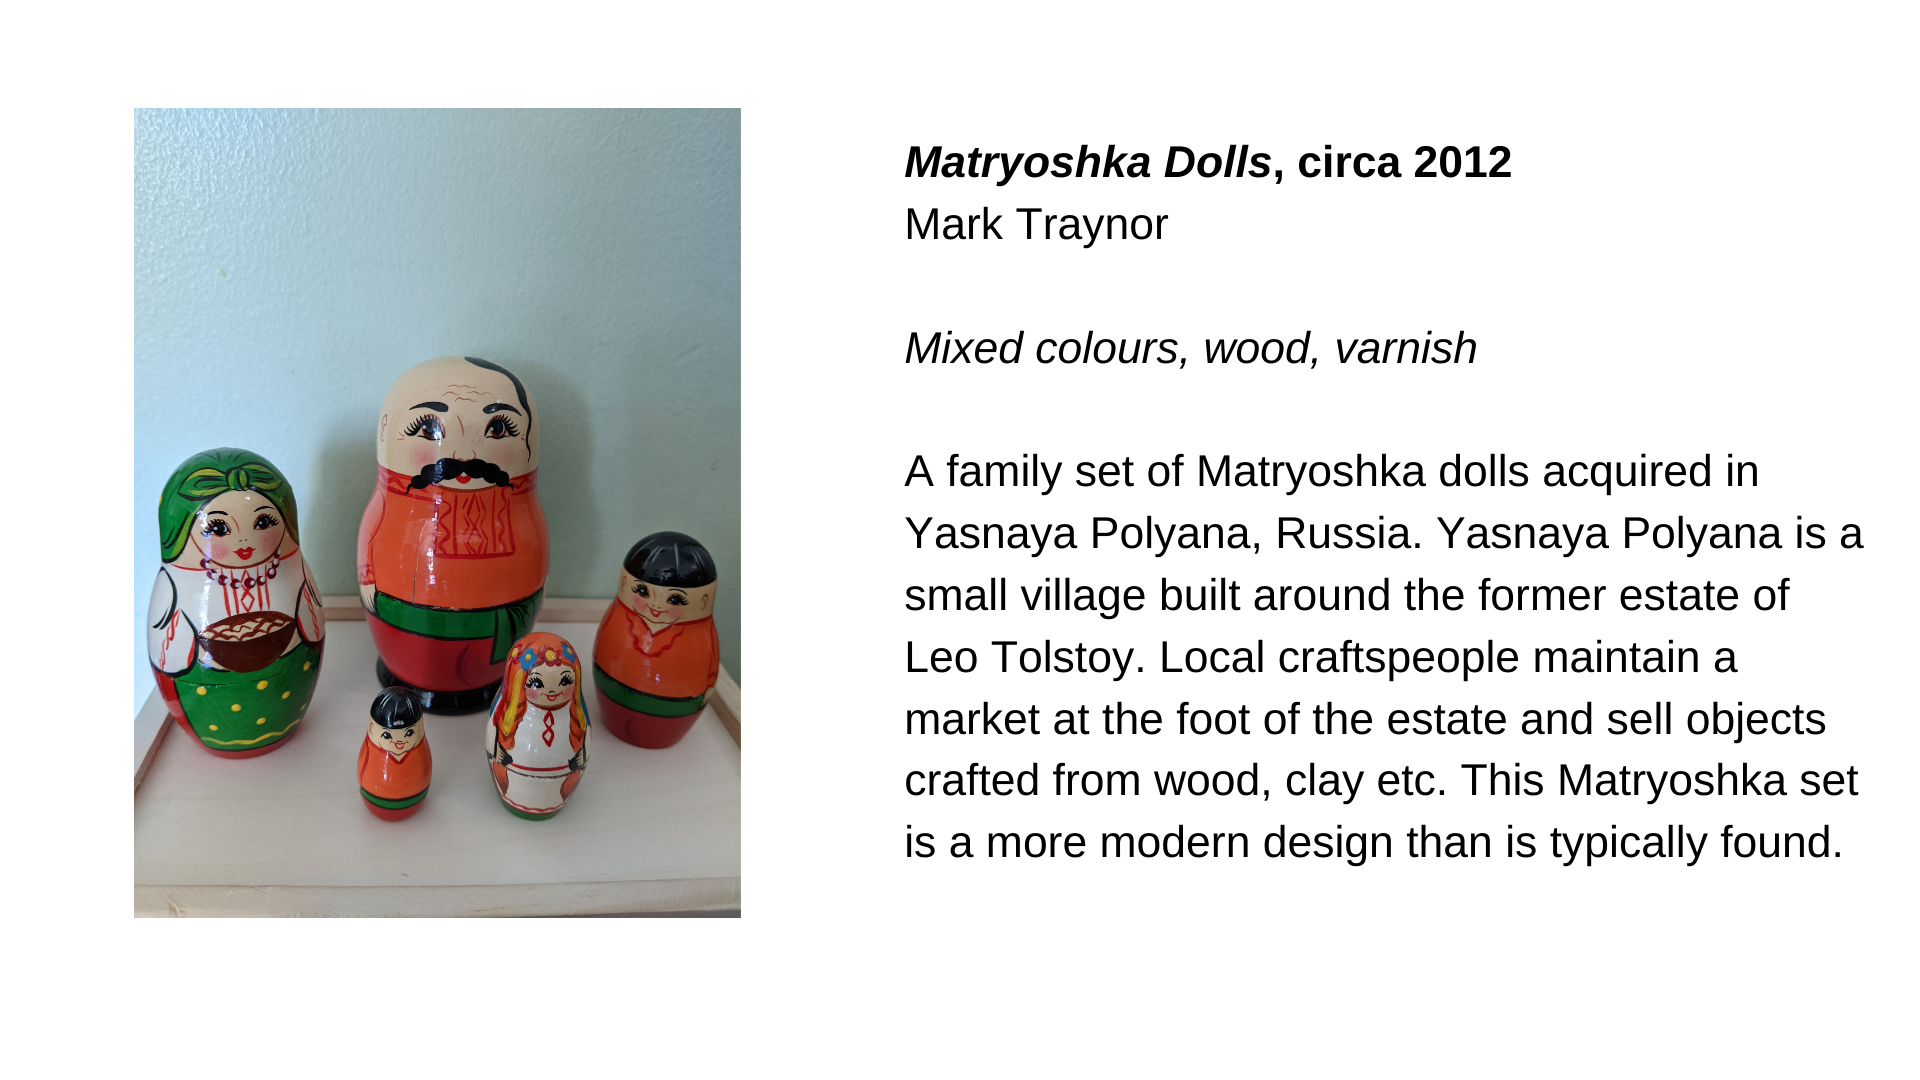  A set of 5 Matryoshka dolls. Next to this image, the etxt, “Matryoshka Dolls, circa 2012 - Mark Traynor. Mixed colours, wood, varnish. A family set of Matryoshka dolls acquired in Yasnaya Polyana, Russia. Yasnaya Polyana is a small village built aro